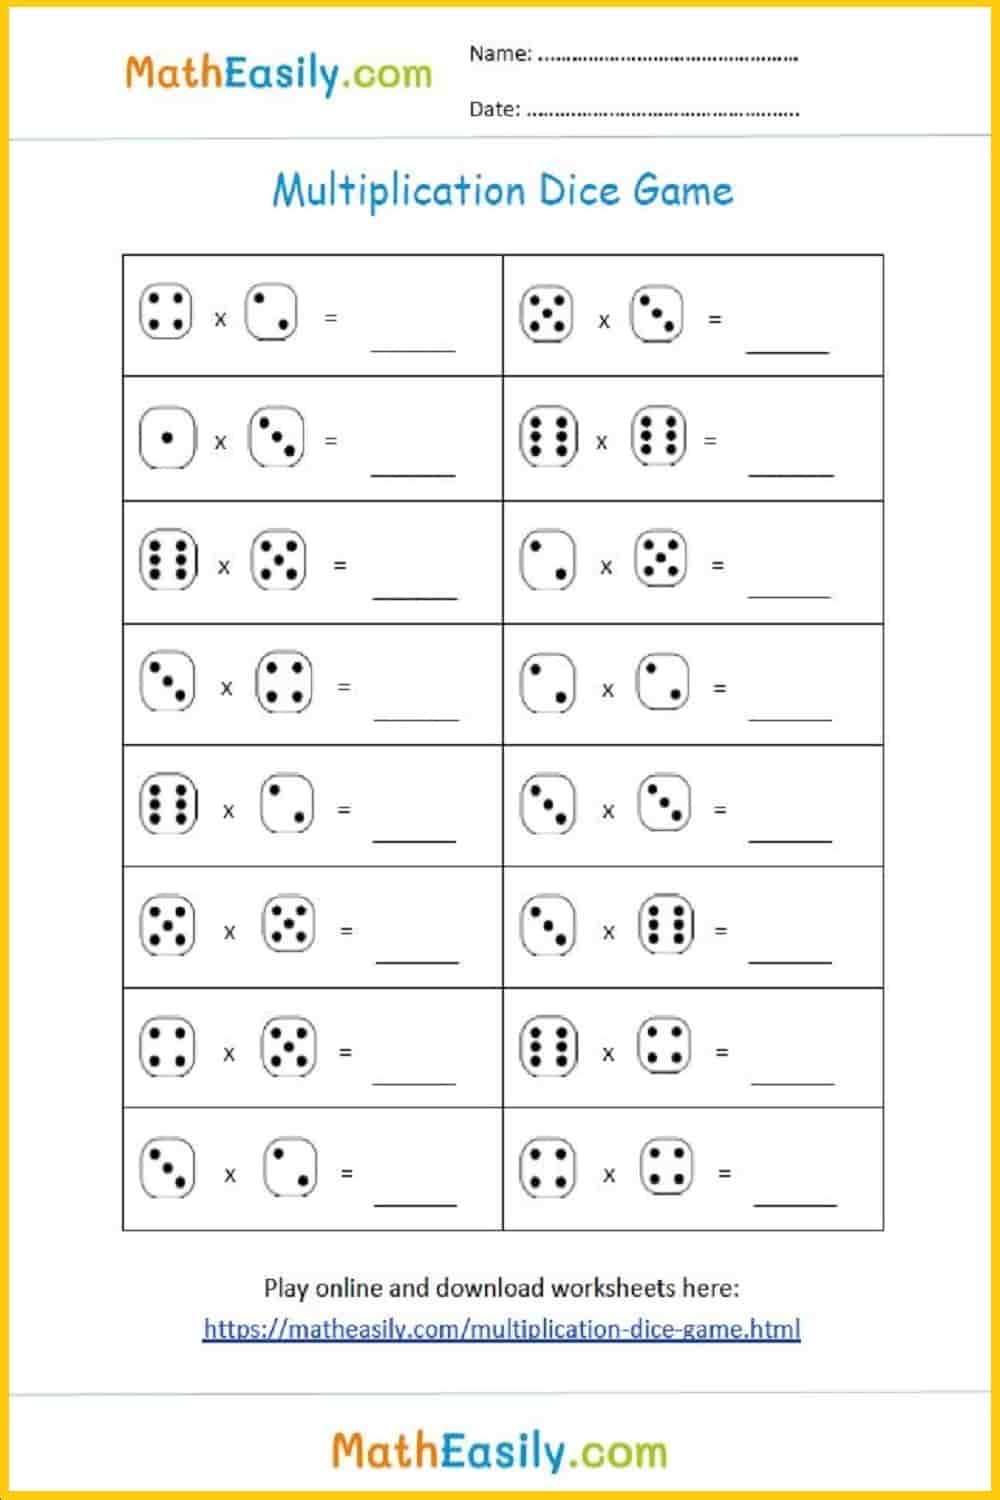 dice-multiplication-game-worksheets-printable-worksheets